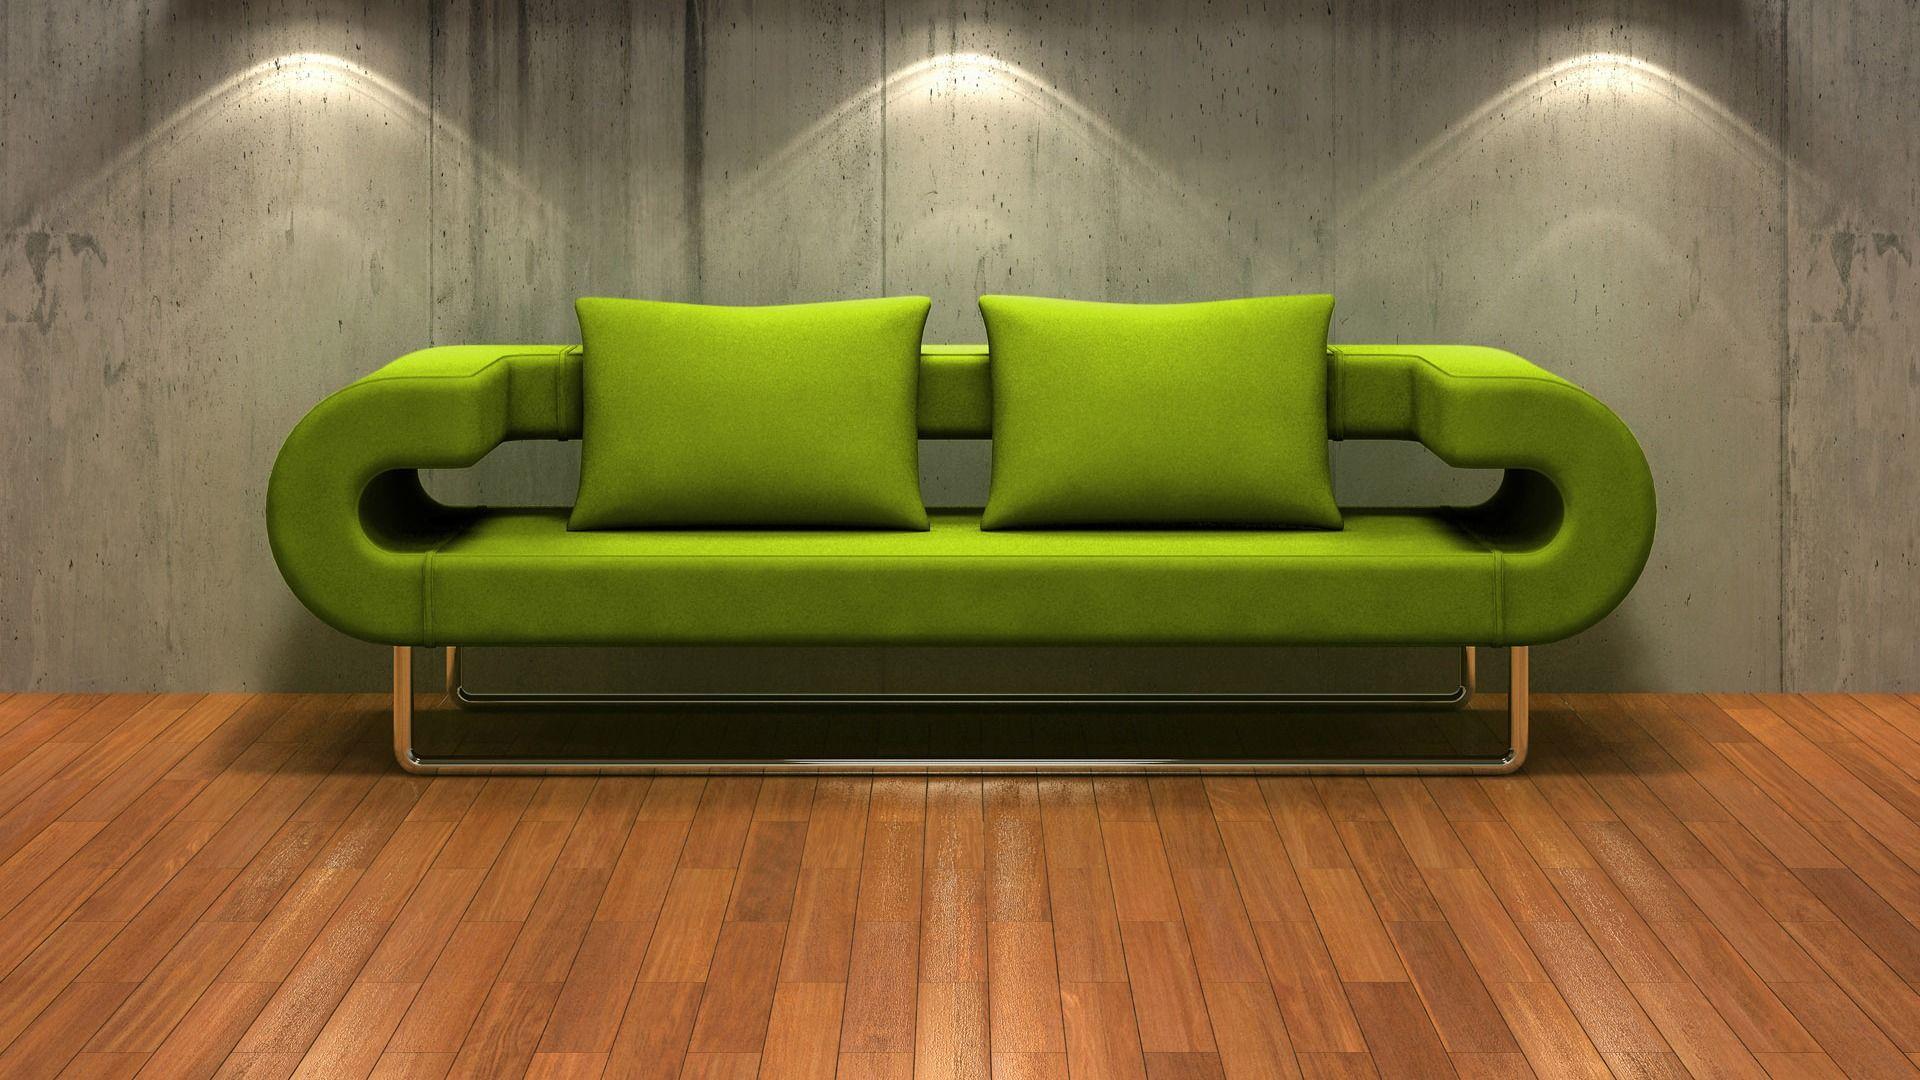 3D Couch Wallpaper Interior Design Other Wallpaper in jpg format